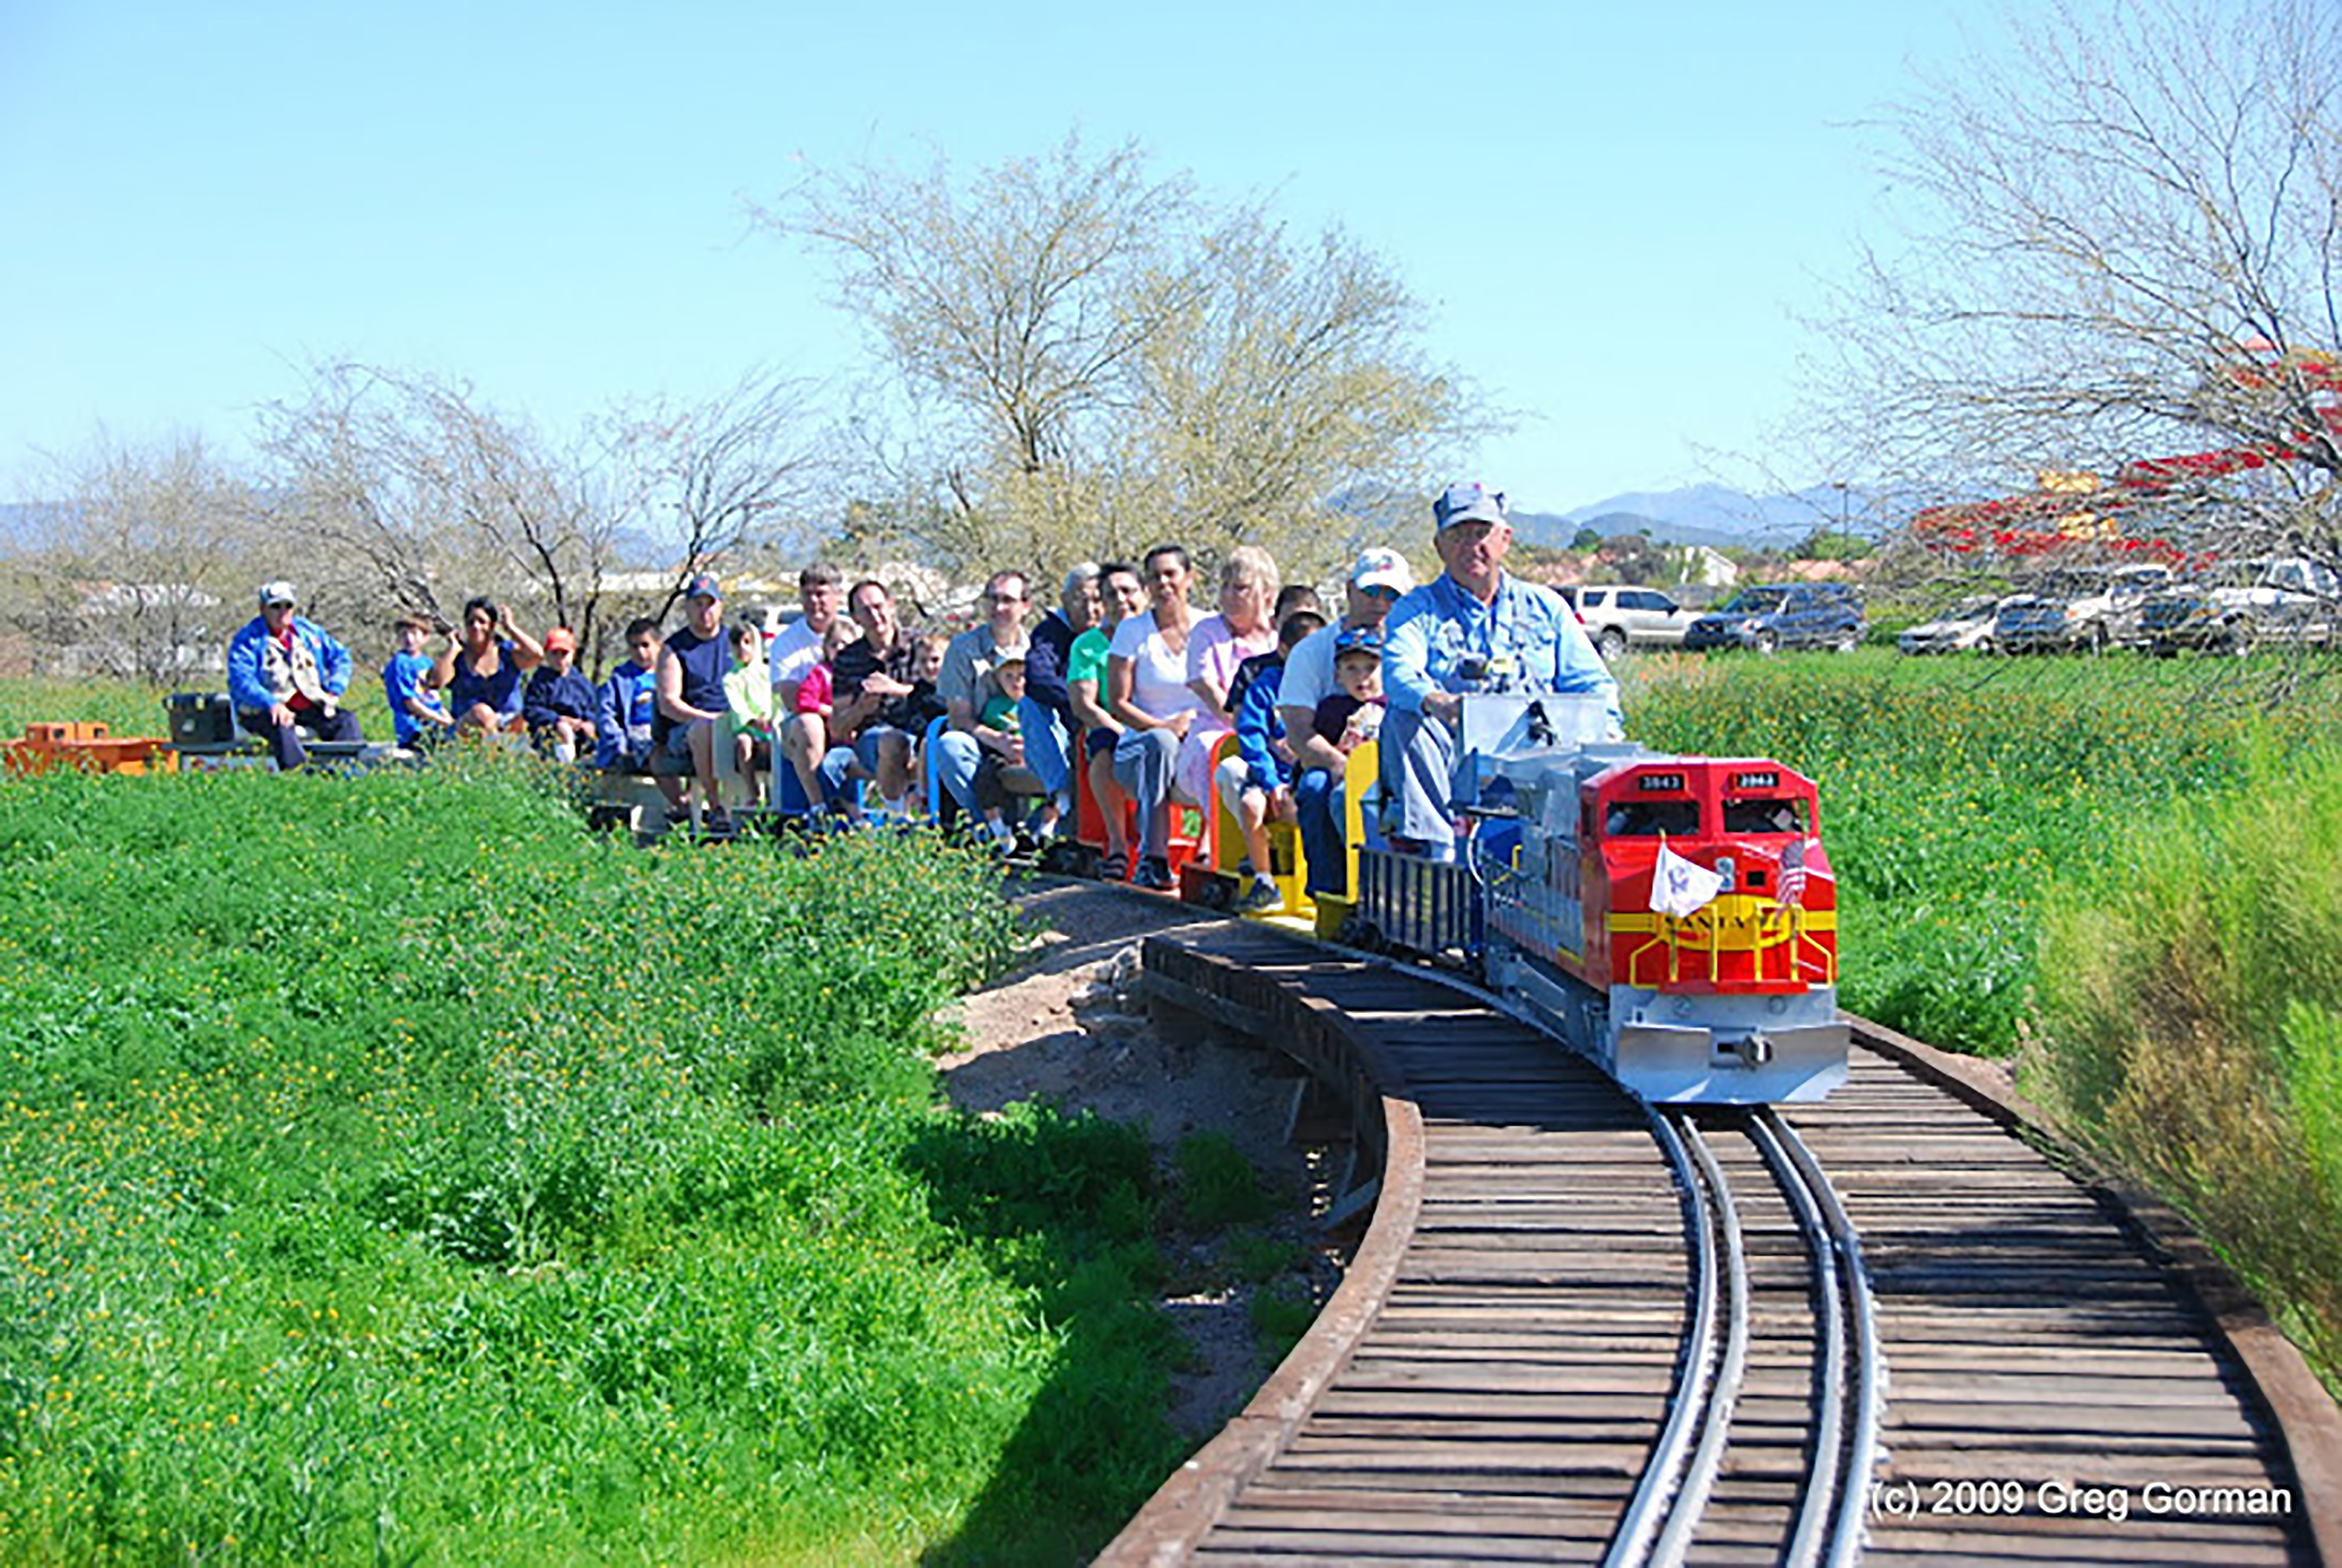 Live Steamer model train carrying passengers in Phoenix park